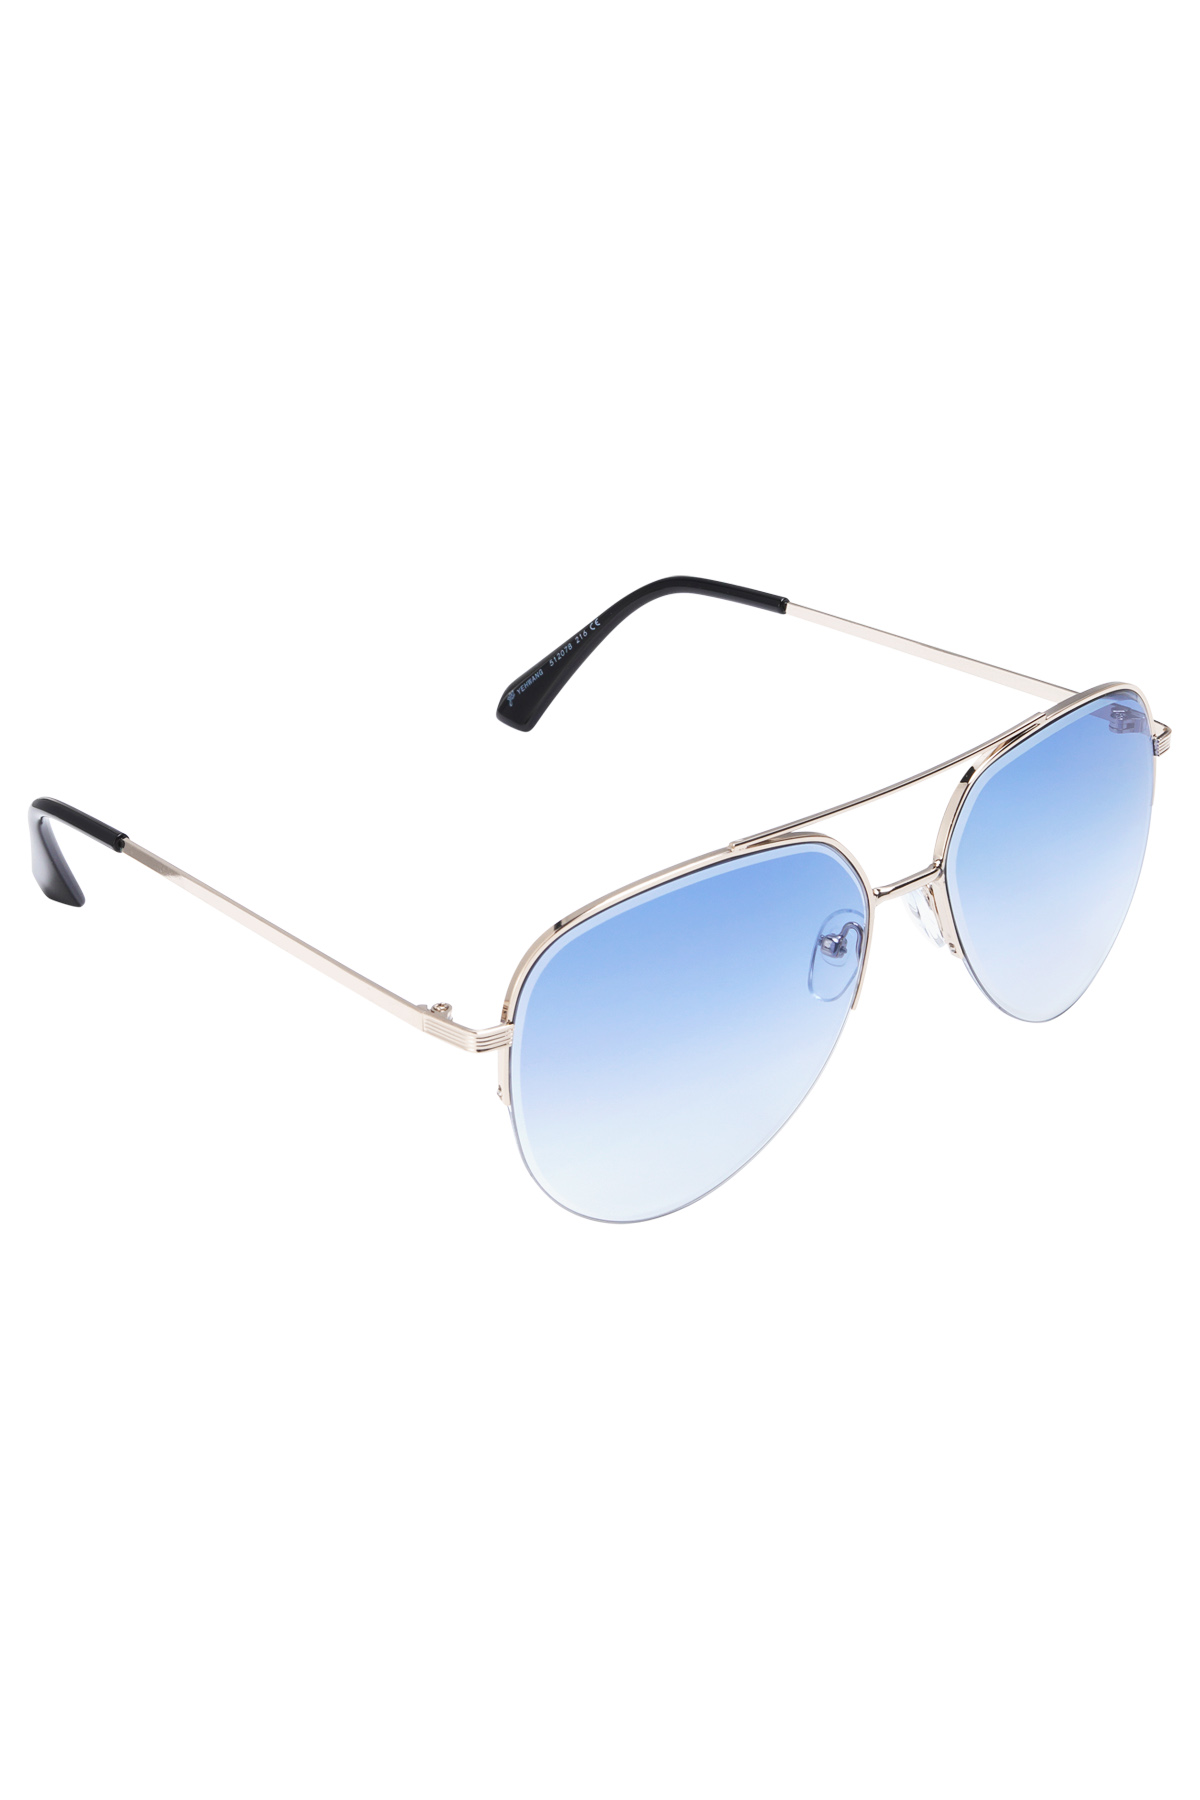 Aviator style sunglasses - blue gold